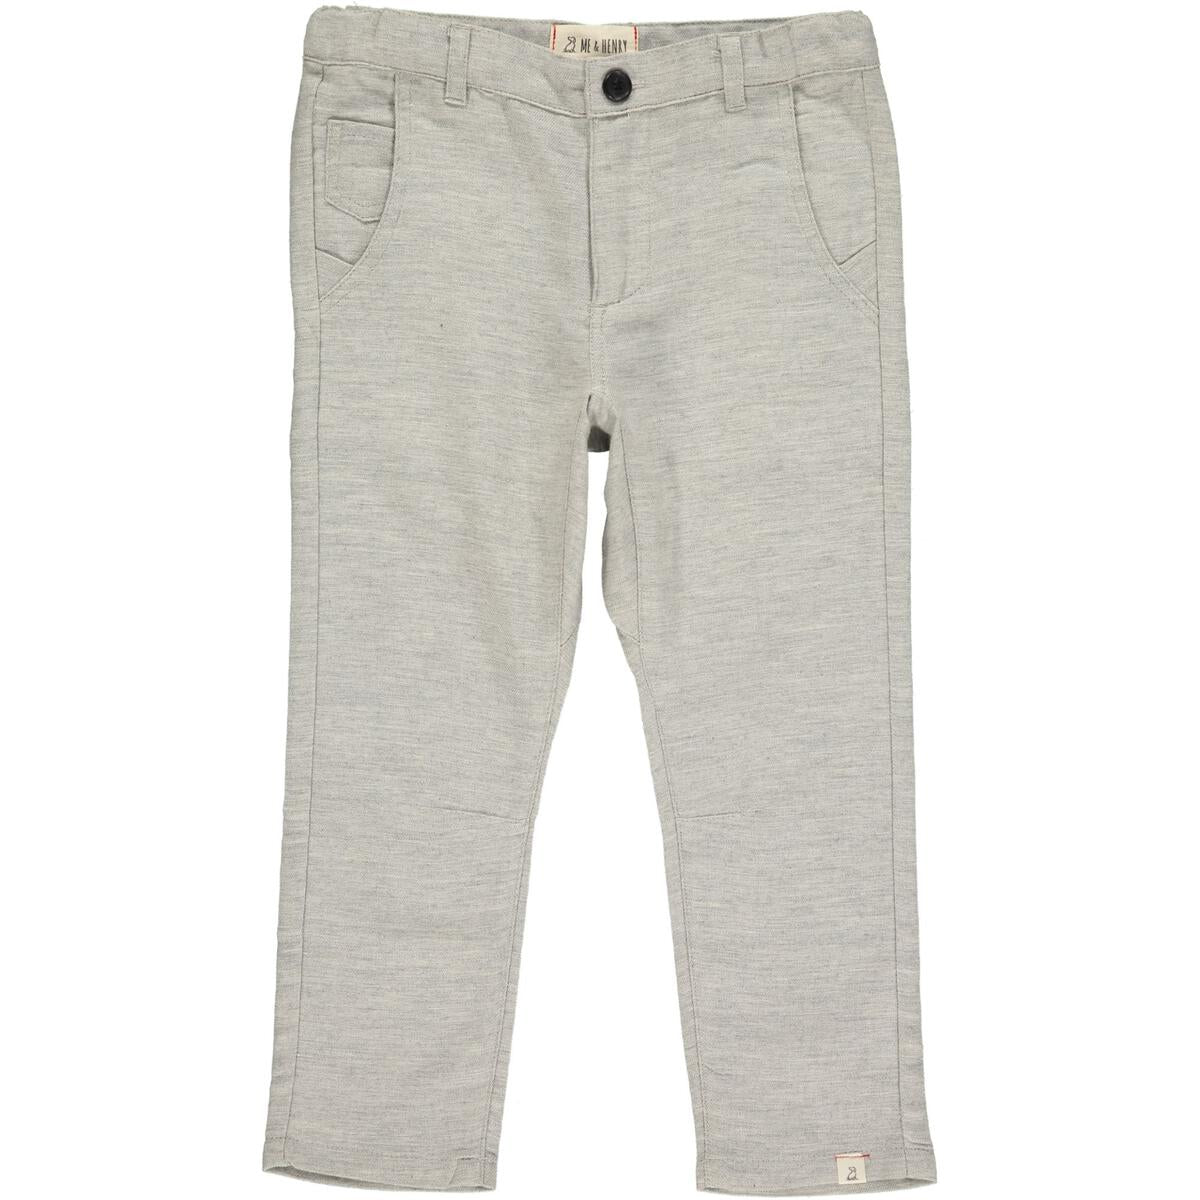 anthony grey soft cotton pant